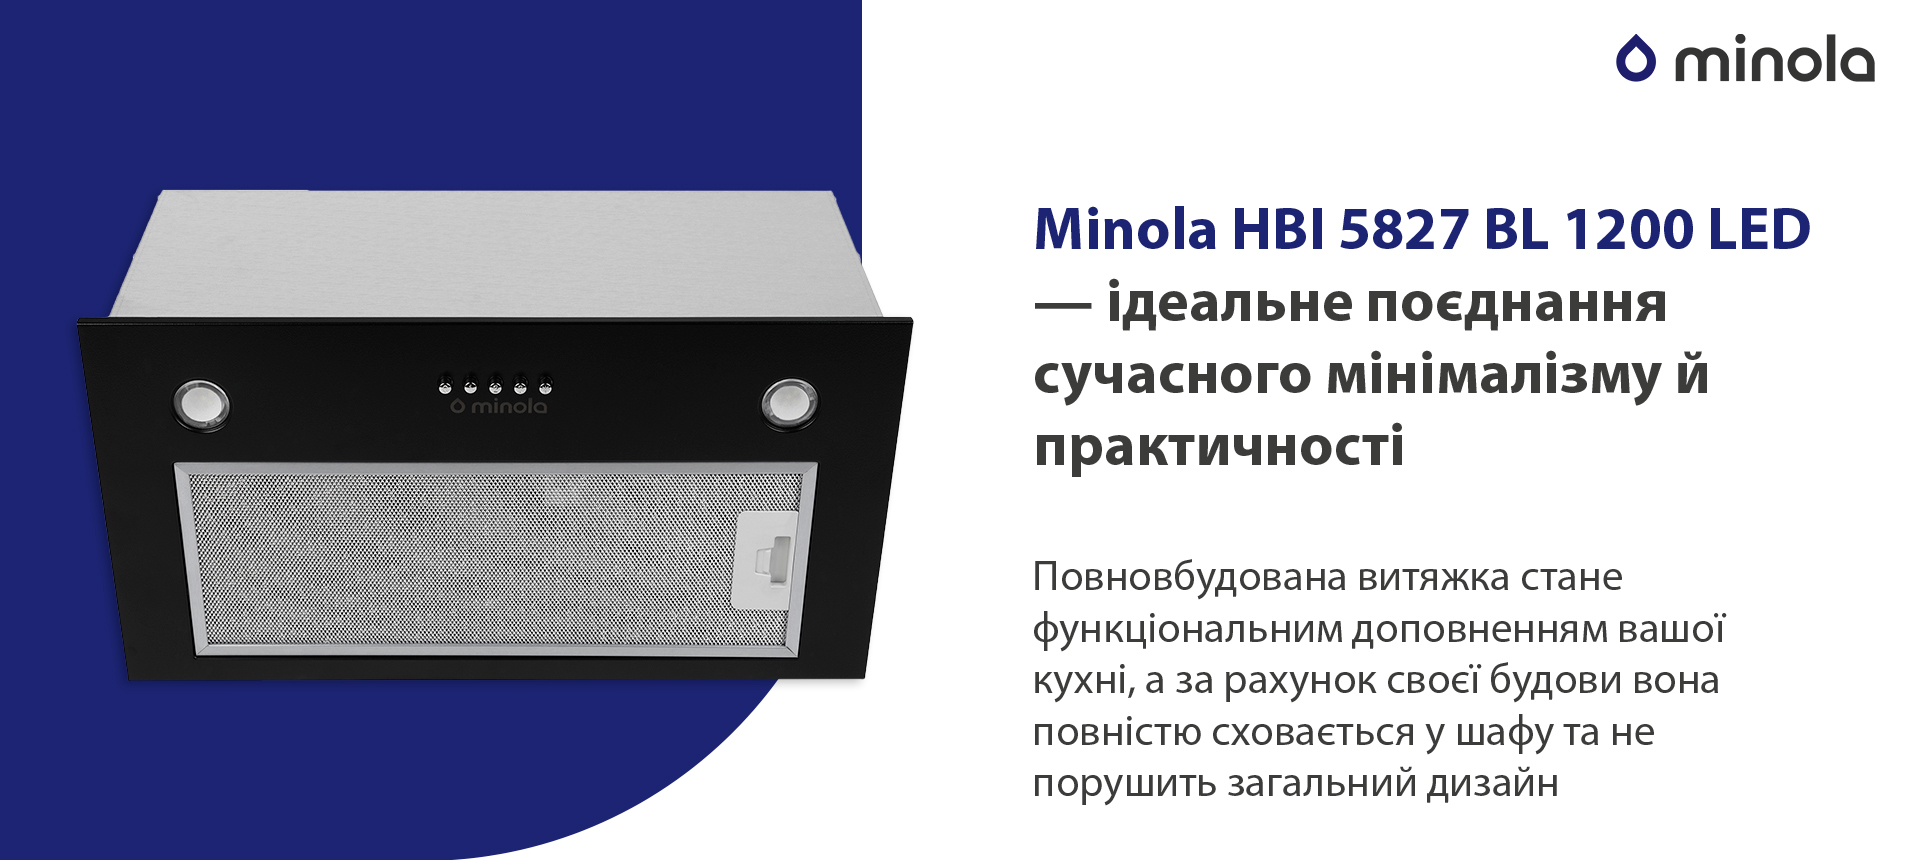 Minola HBI 5827 BL 1200 LED в магазине в Киеве - фото 10